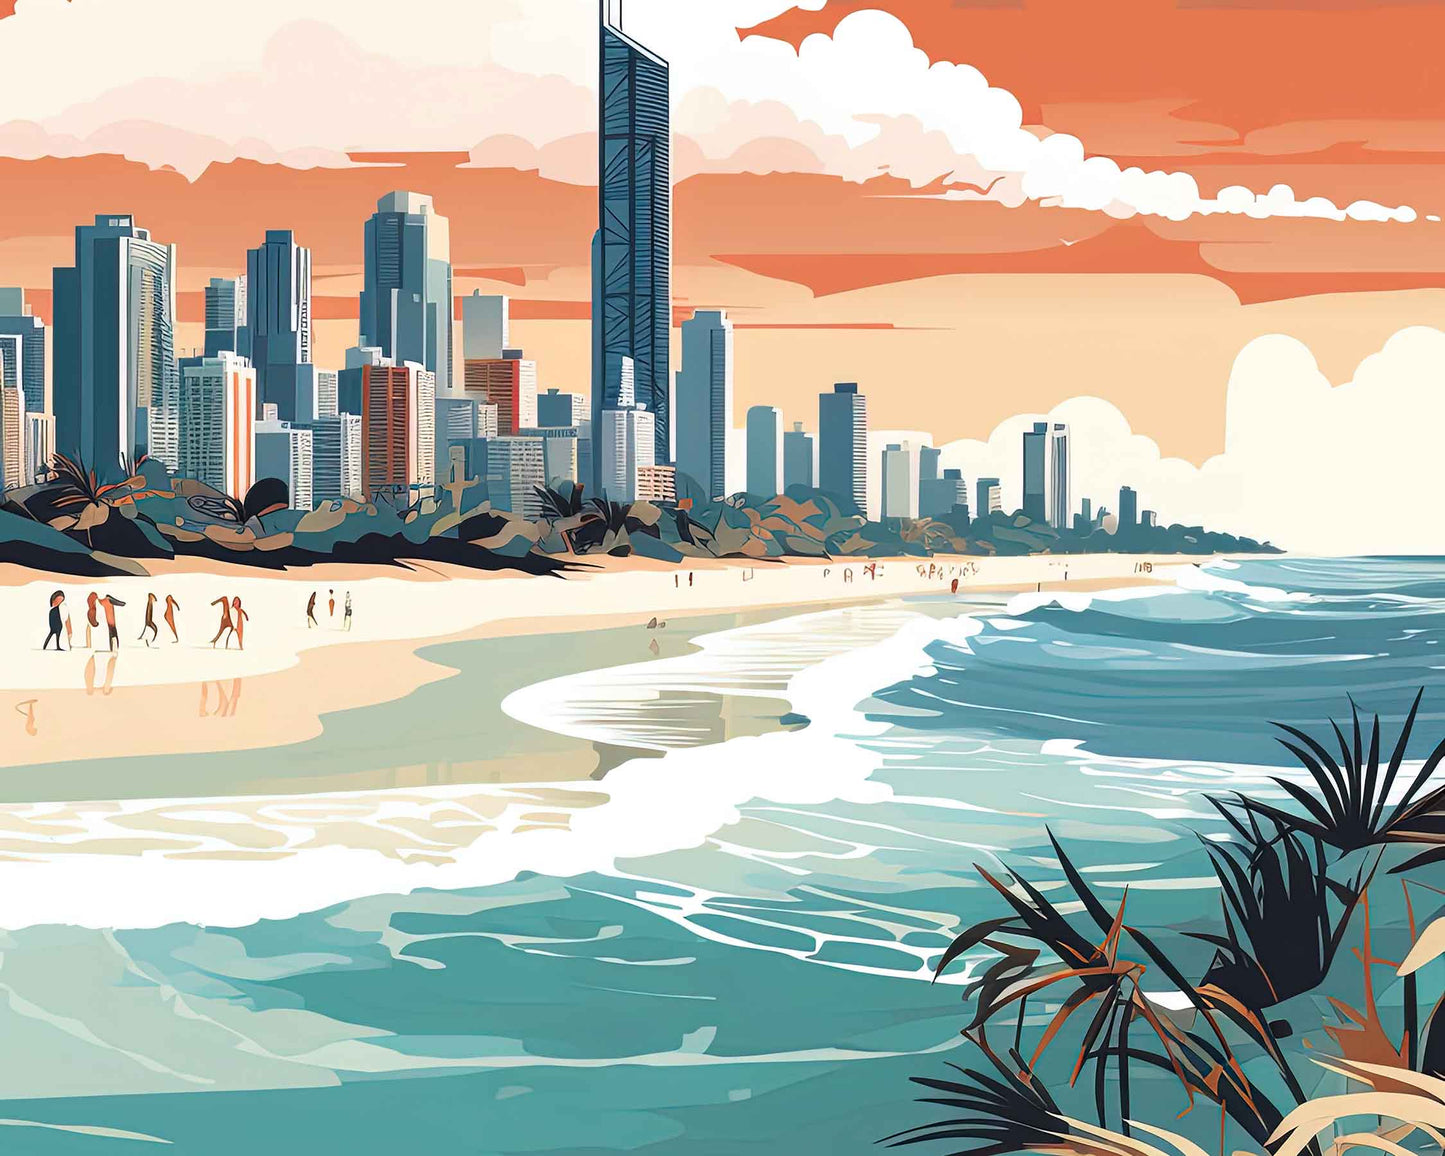 Framed Image of Gold Coast Australia Travel Poster Illustration Prints Wall Art